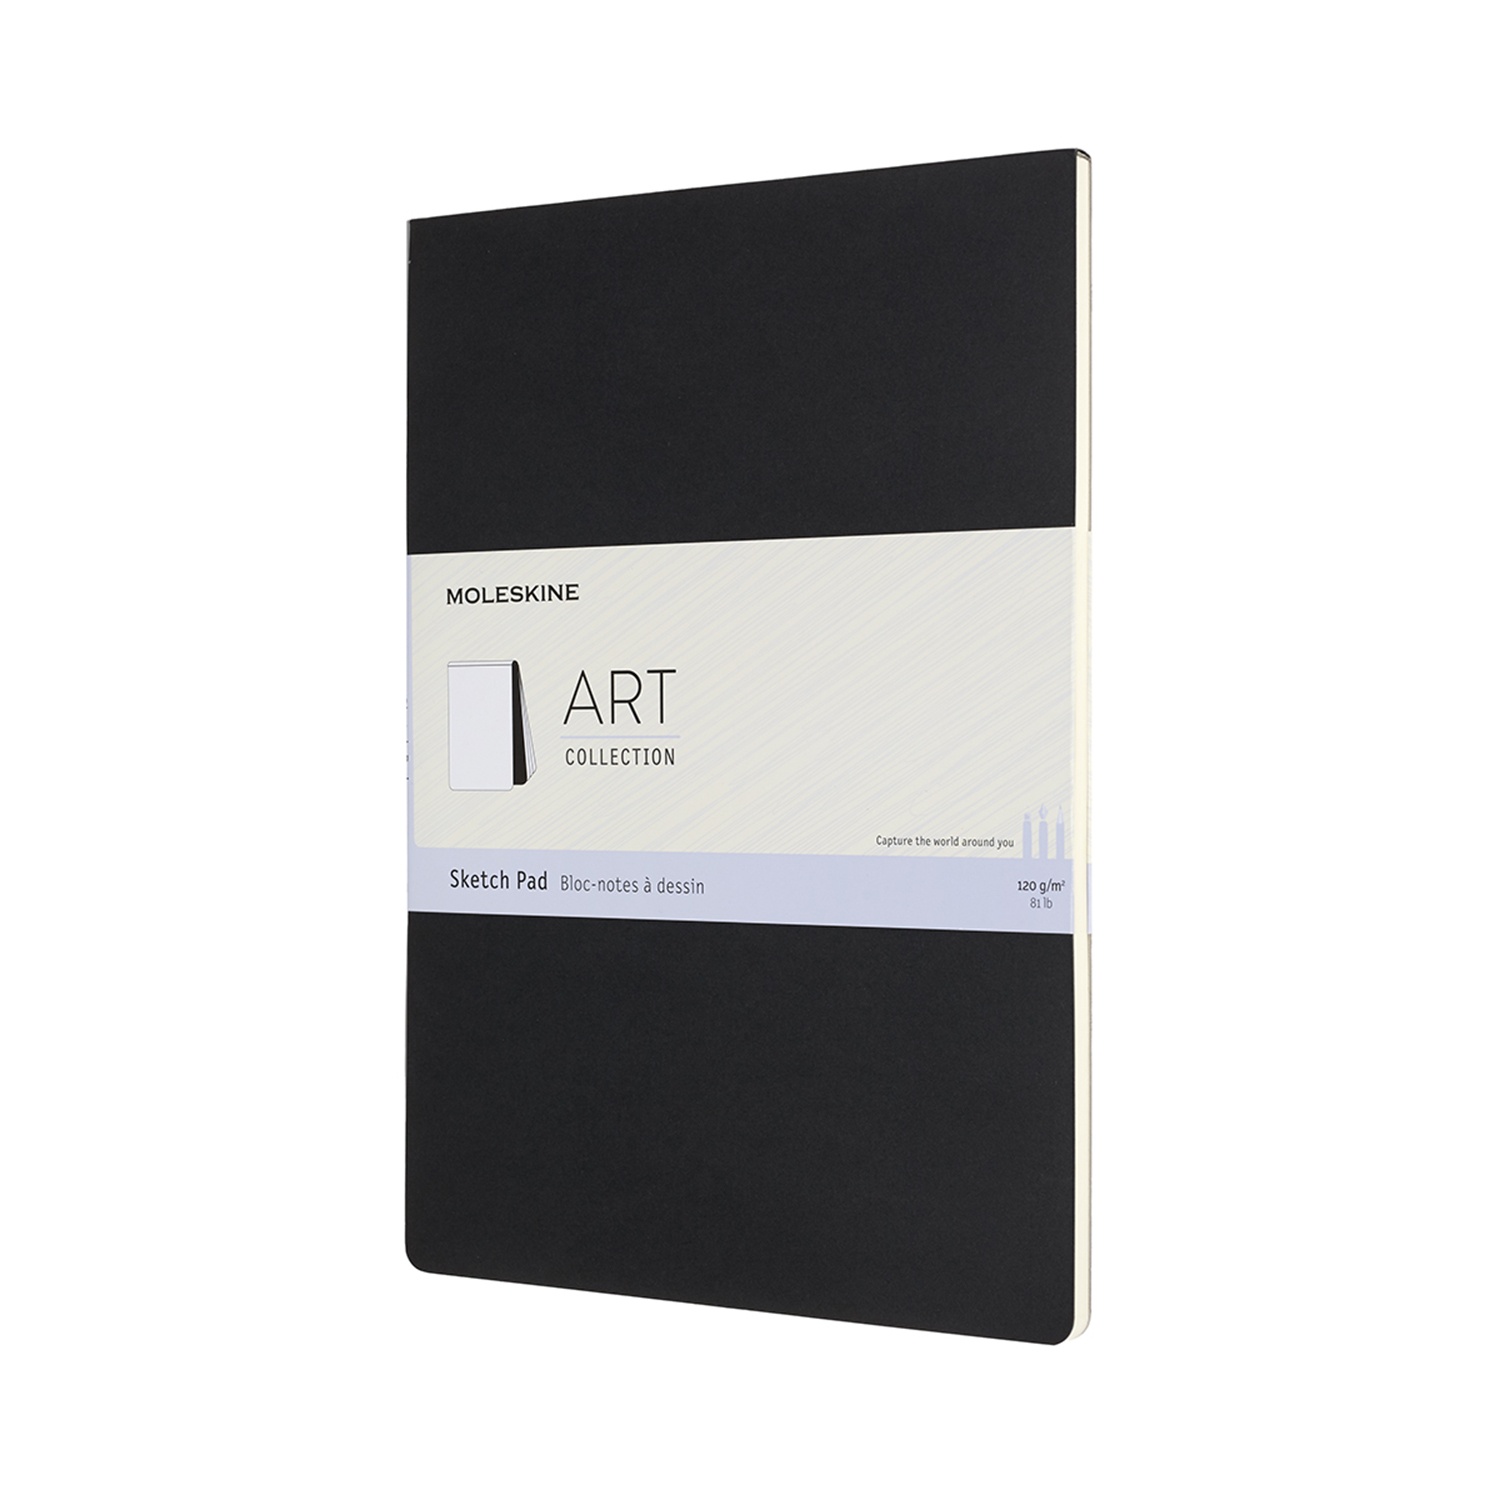 Скетчбук для рисования ART SOFT SKETCH PAD 120г/кв.м (А4) 210х297мм 44л. черный по 1 979.00 руб от Moleskine